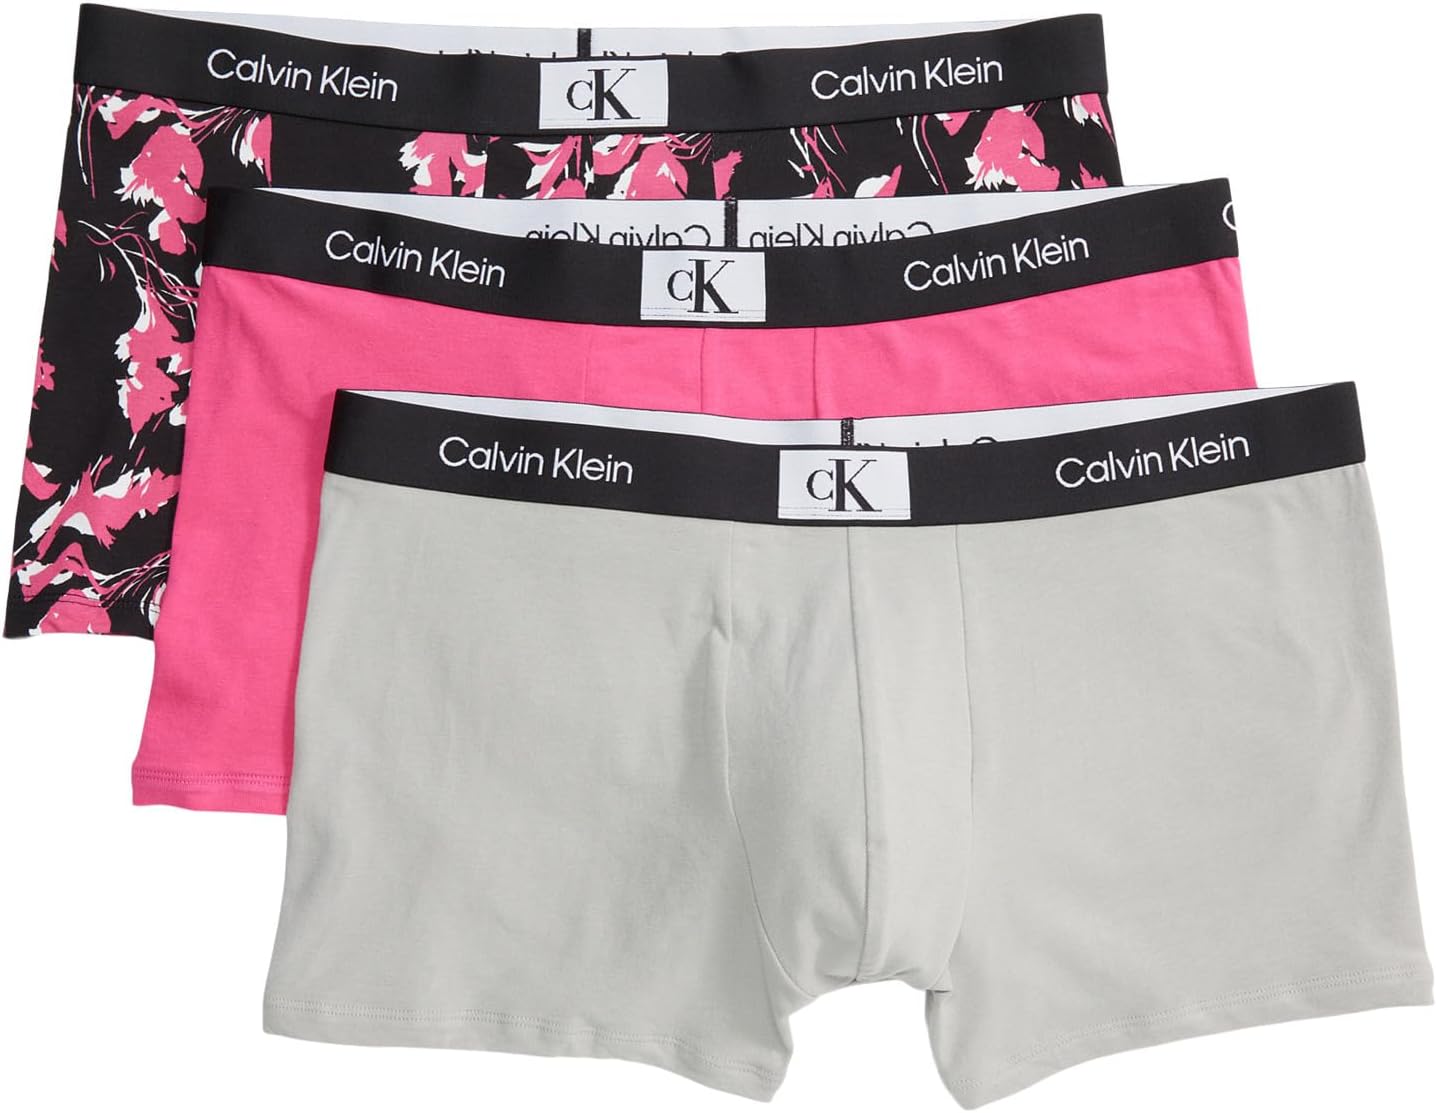 Трусы 1996 Cotton Trunks 3-Pack Calvin Klein Underwear, цвет Ripple Floral/Fuchsia Rose/Fuchsia Rose/Authentic Grey цена и фото